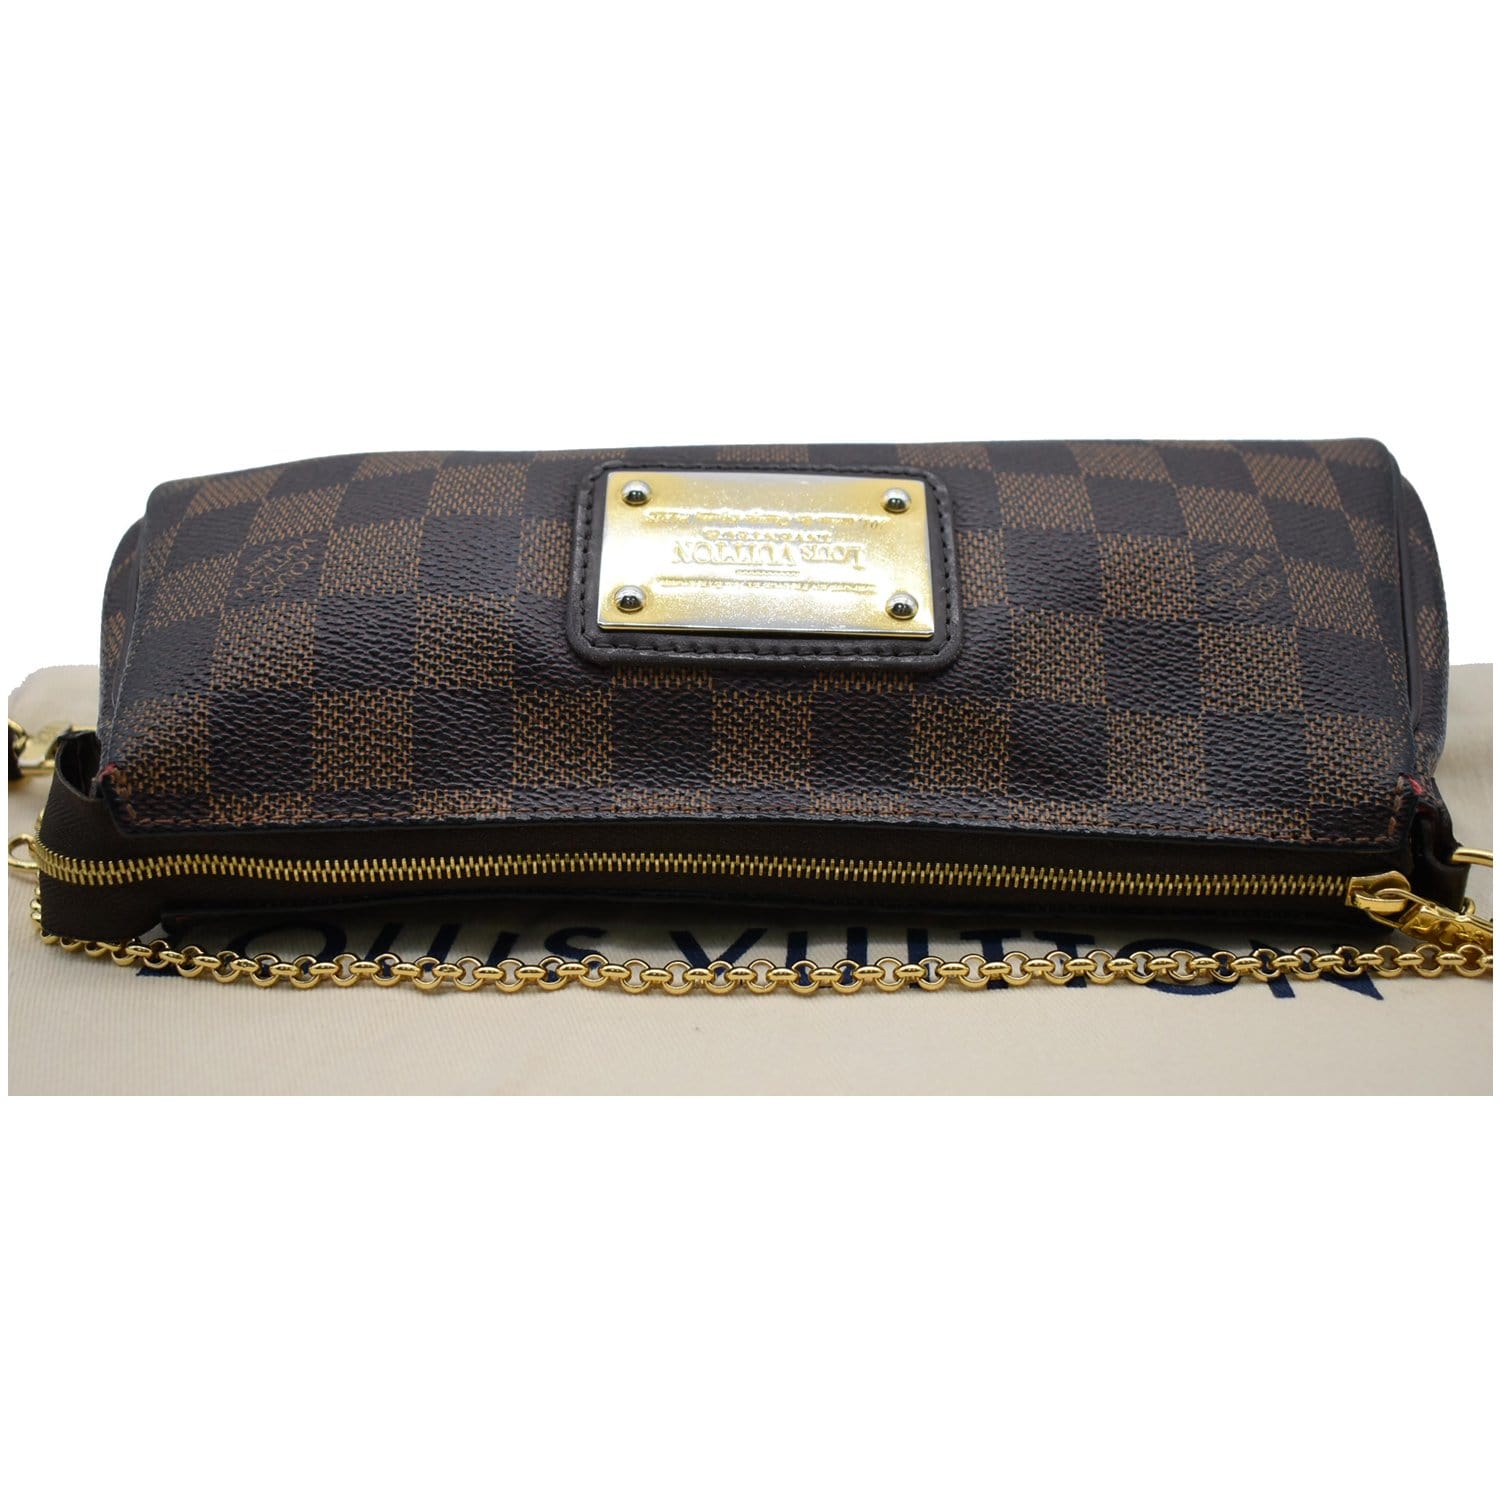 Pre-Owned Louis Vuitton Eva Damier Ebene Crossbody Bag - Very Good